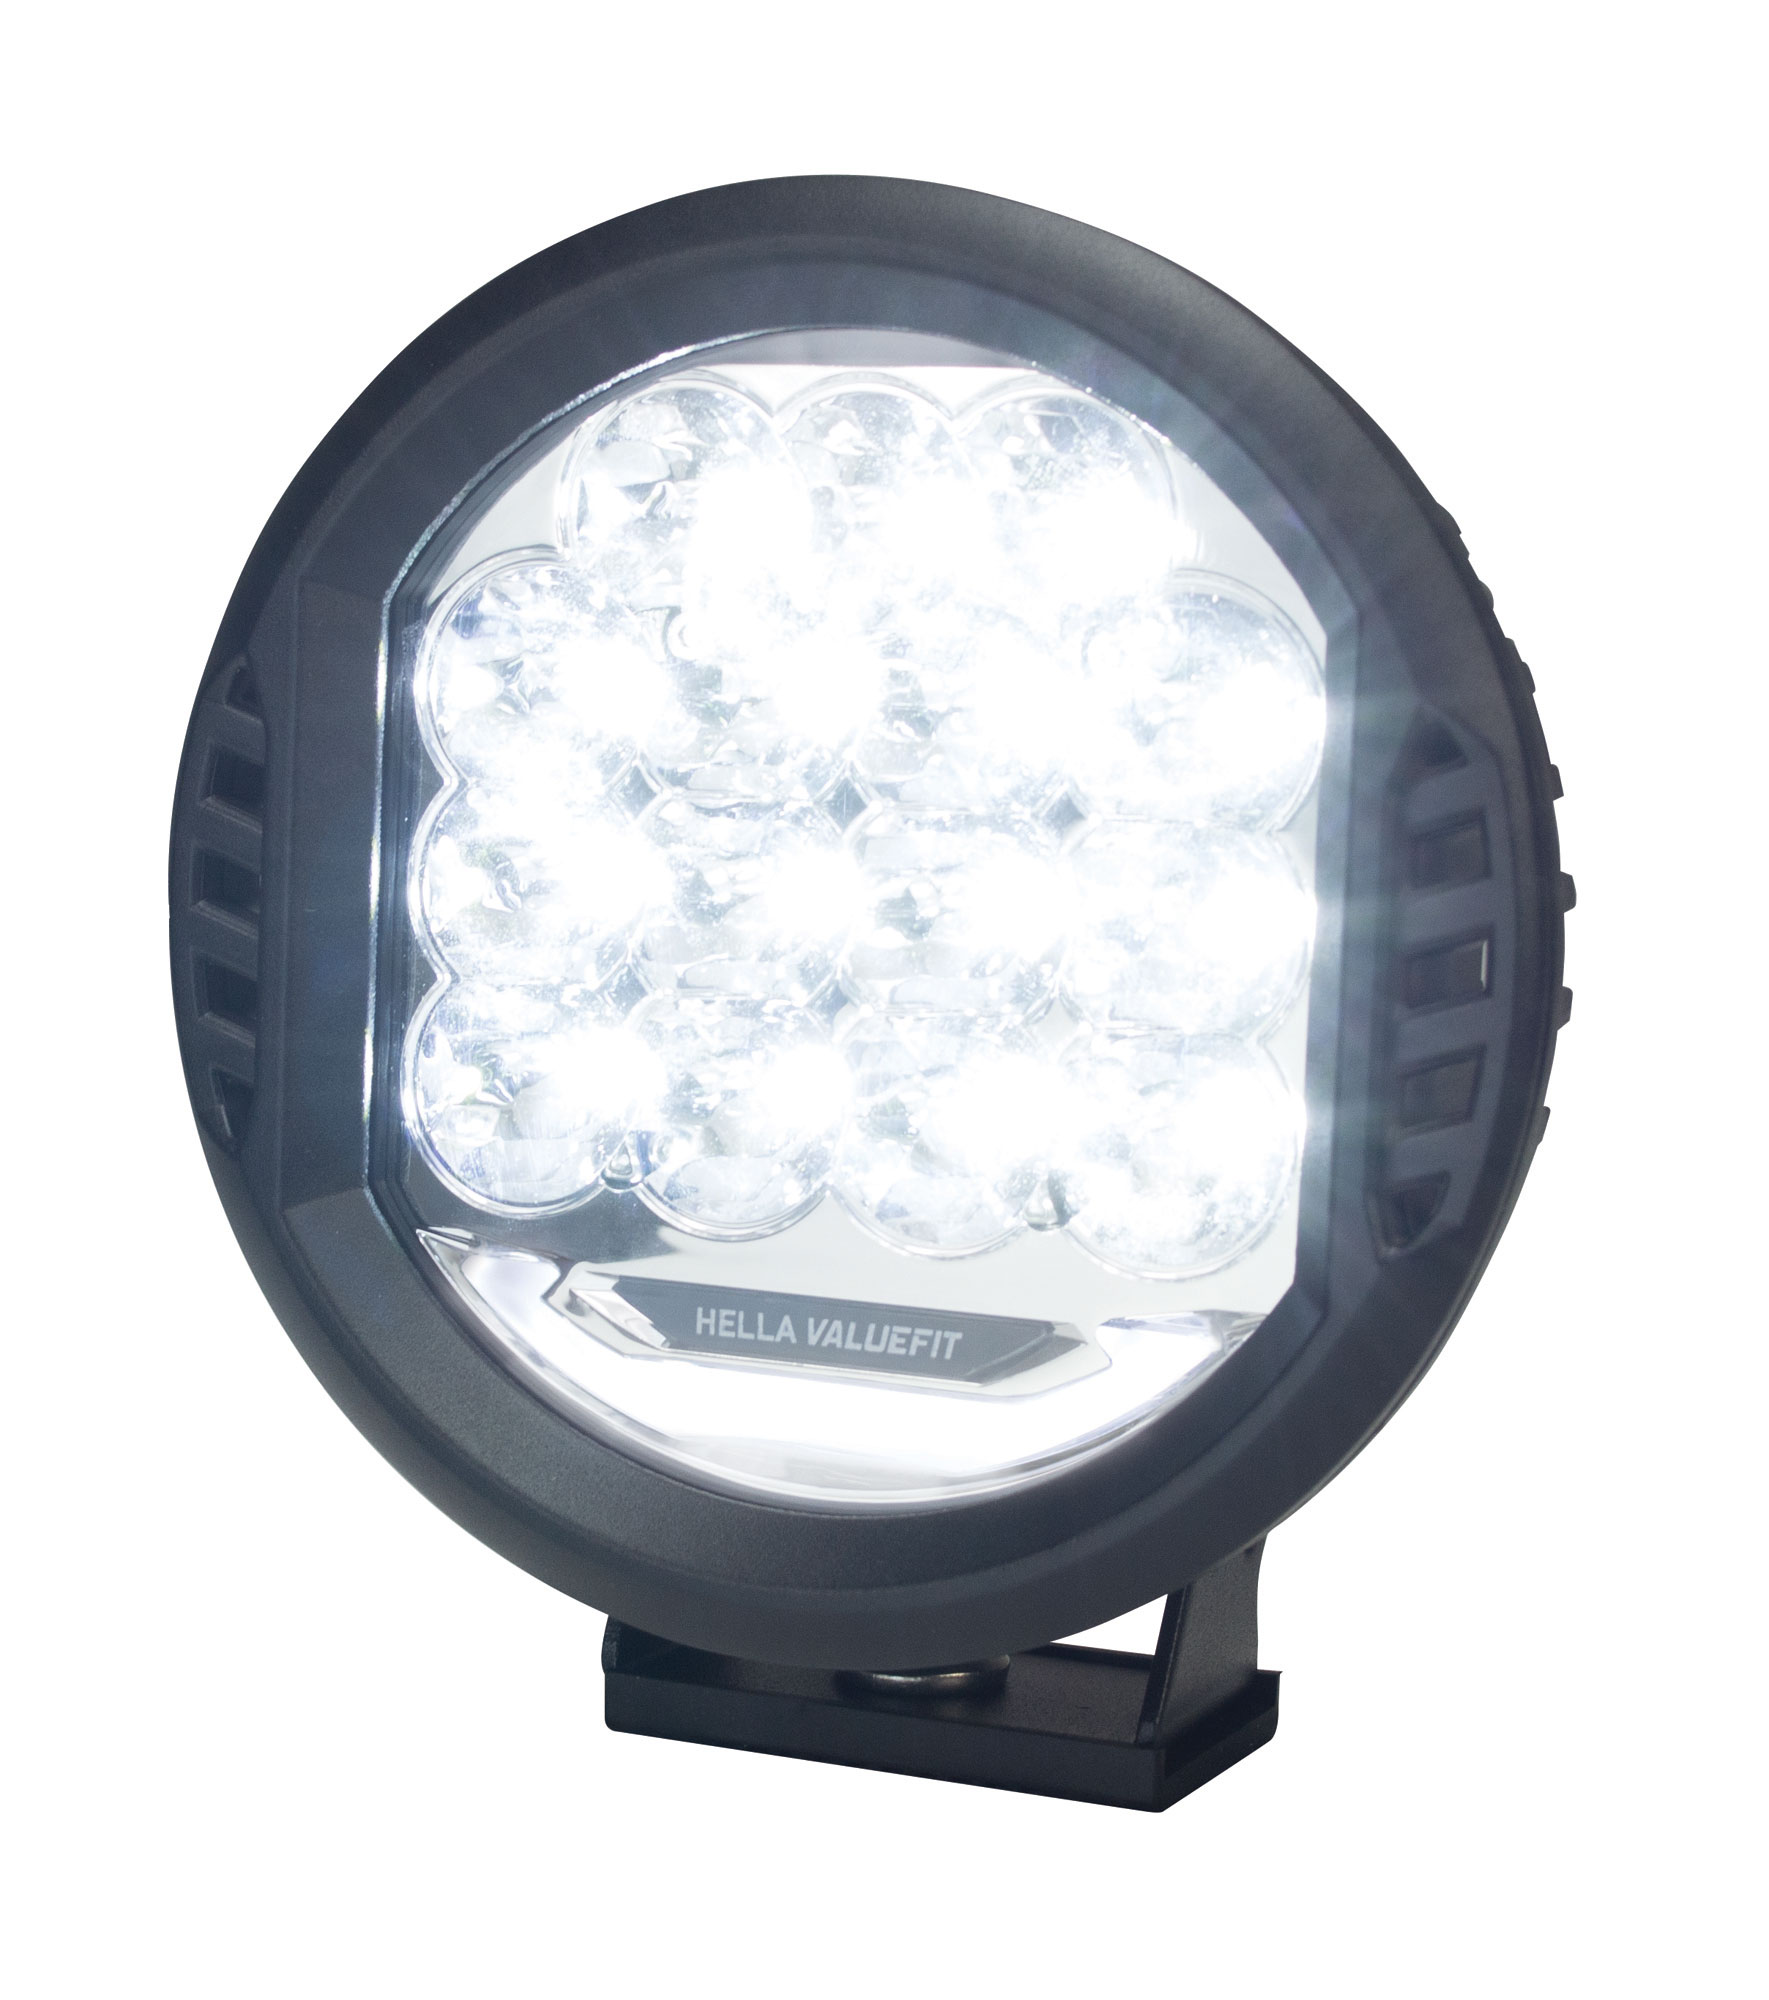 Hella ValueFit 500 LED - Driving Light, Kit